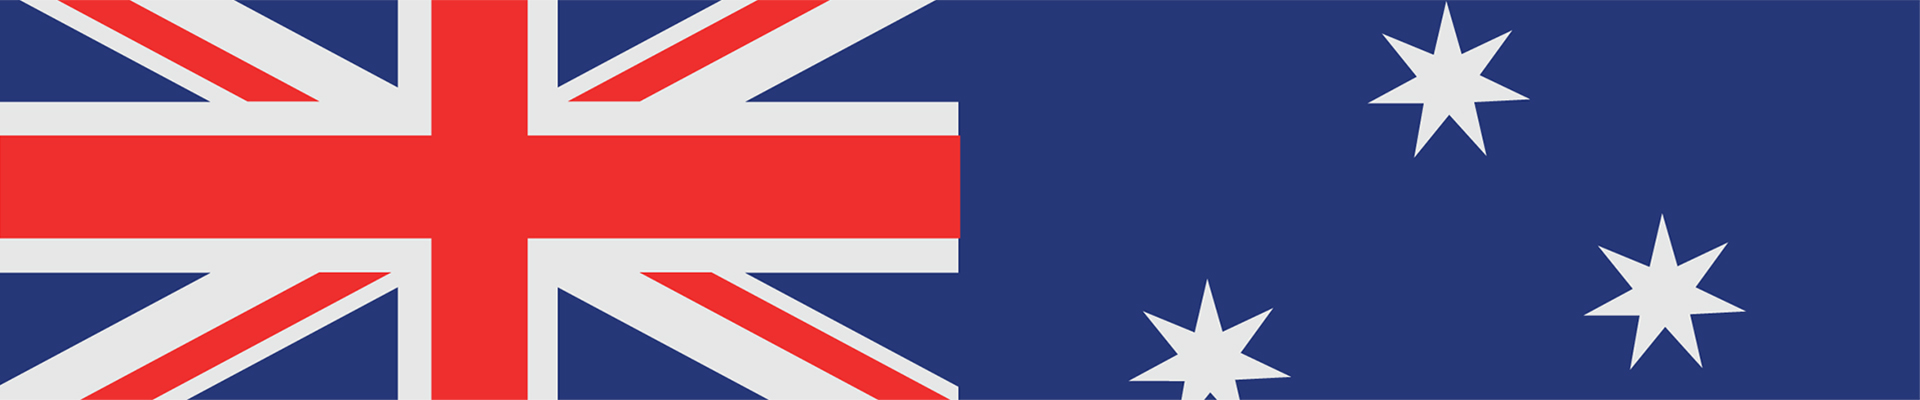 Ruud vs Zverev en direct – drapeau Australie